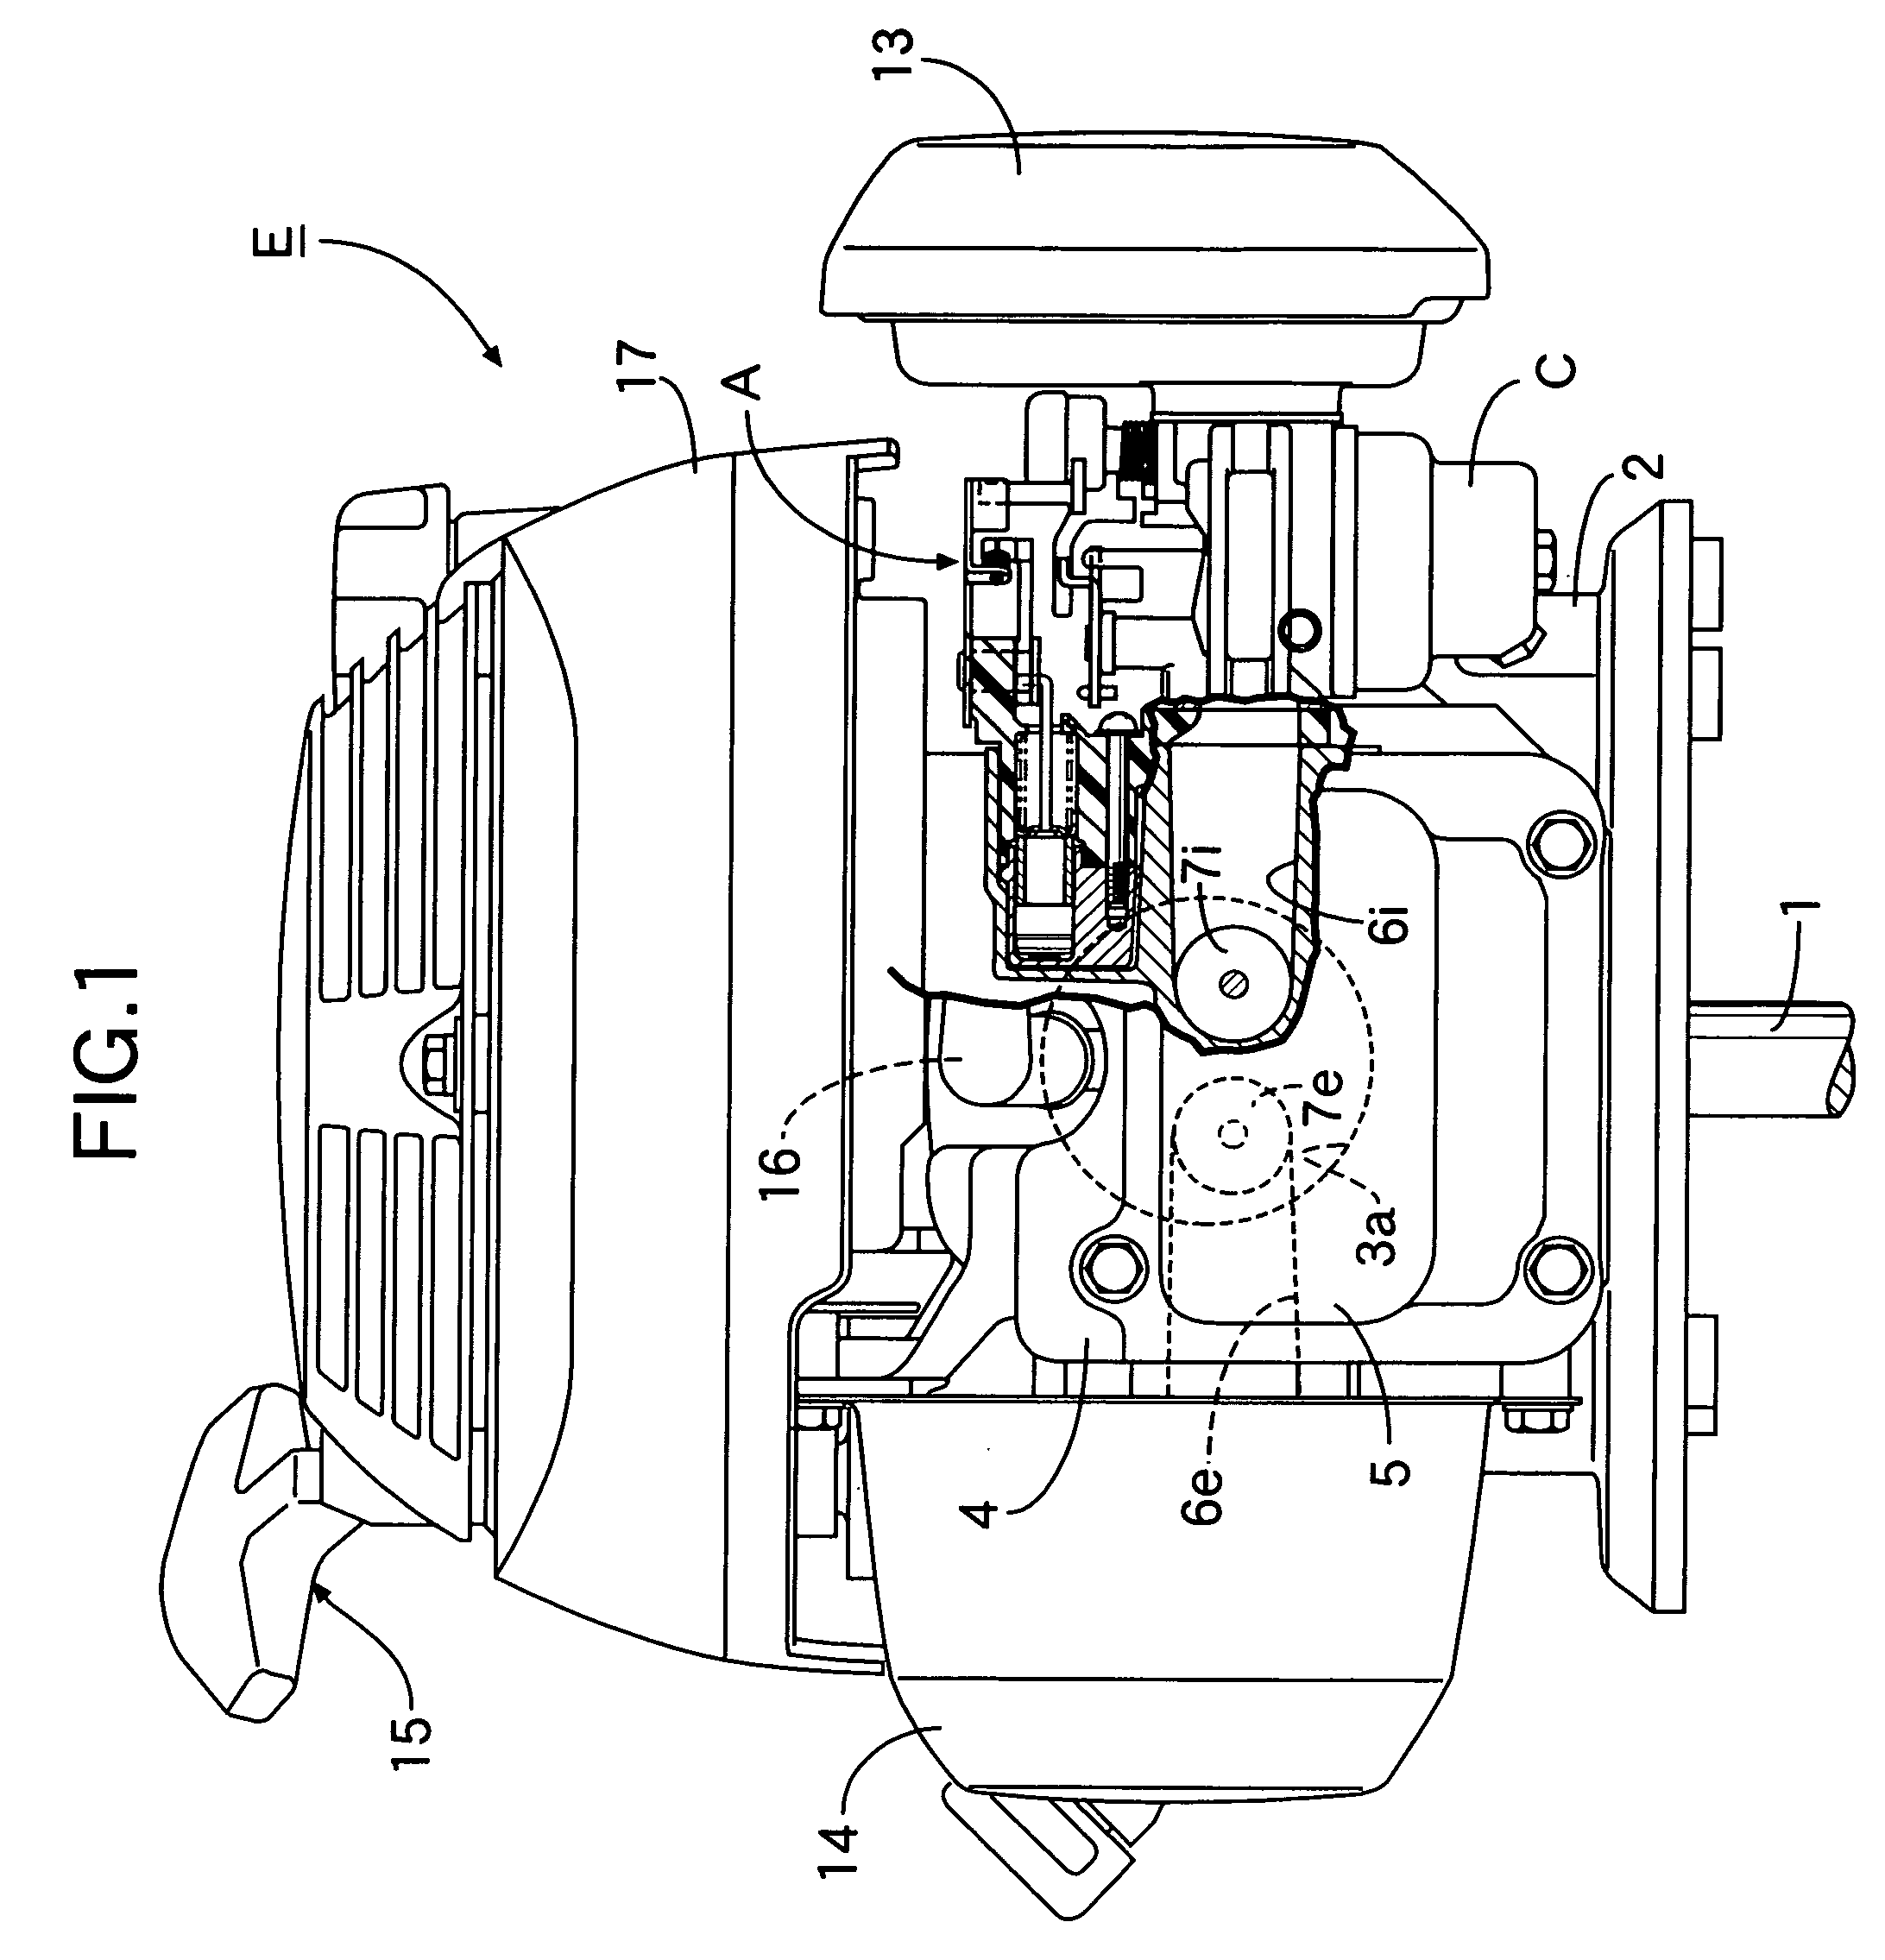 Carburetor throttle valve control system